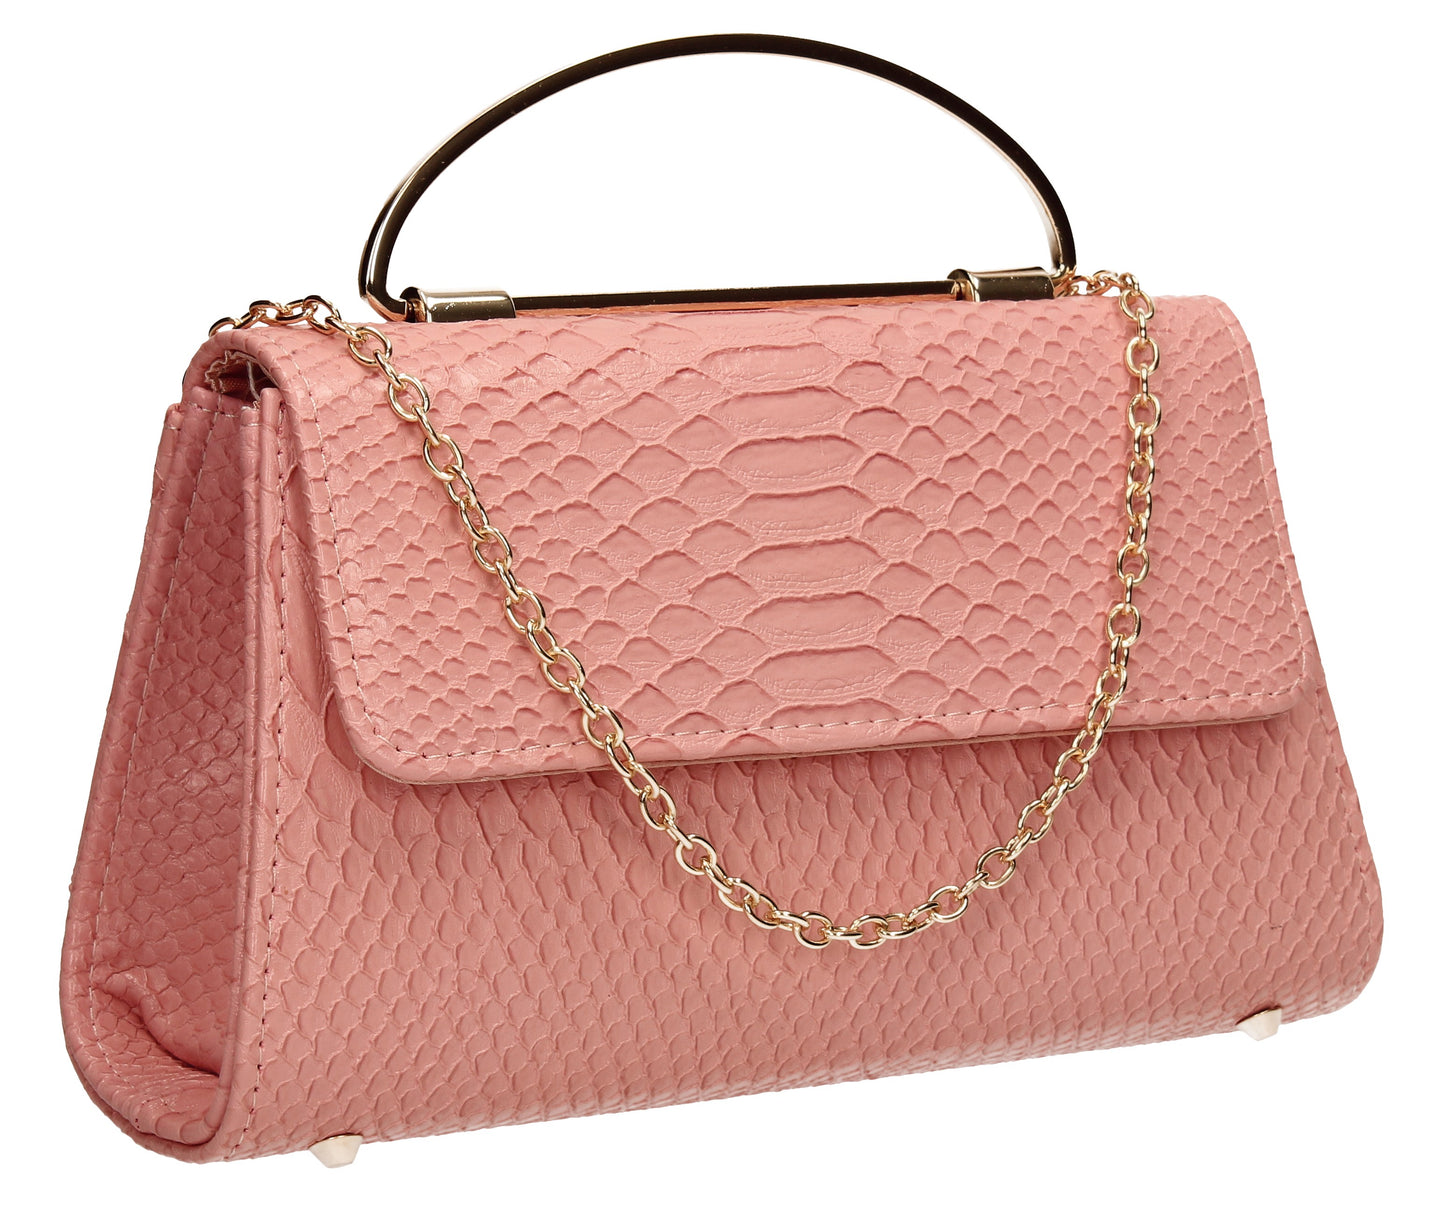 SWANKYSWANS Laura Clutch Bag Pink Cute Cheap Clutch Bag For Weddings School and Work